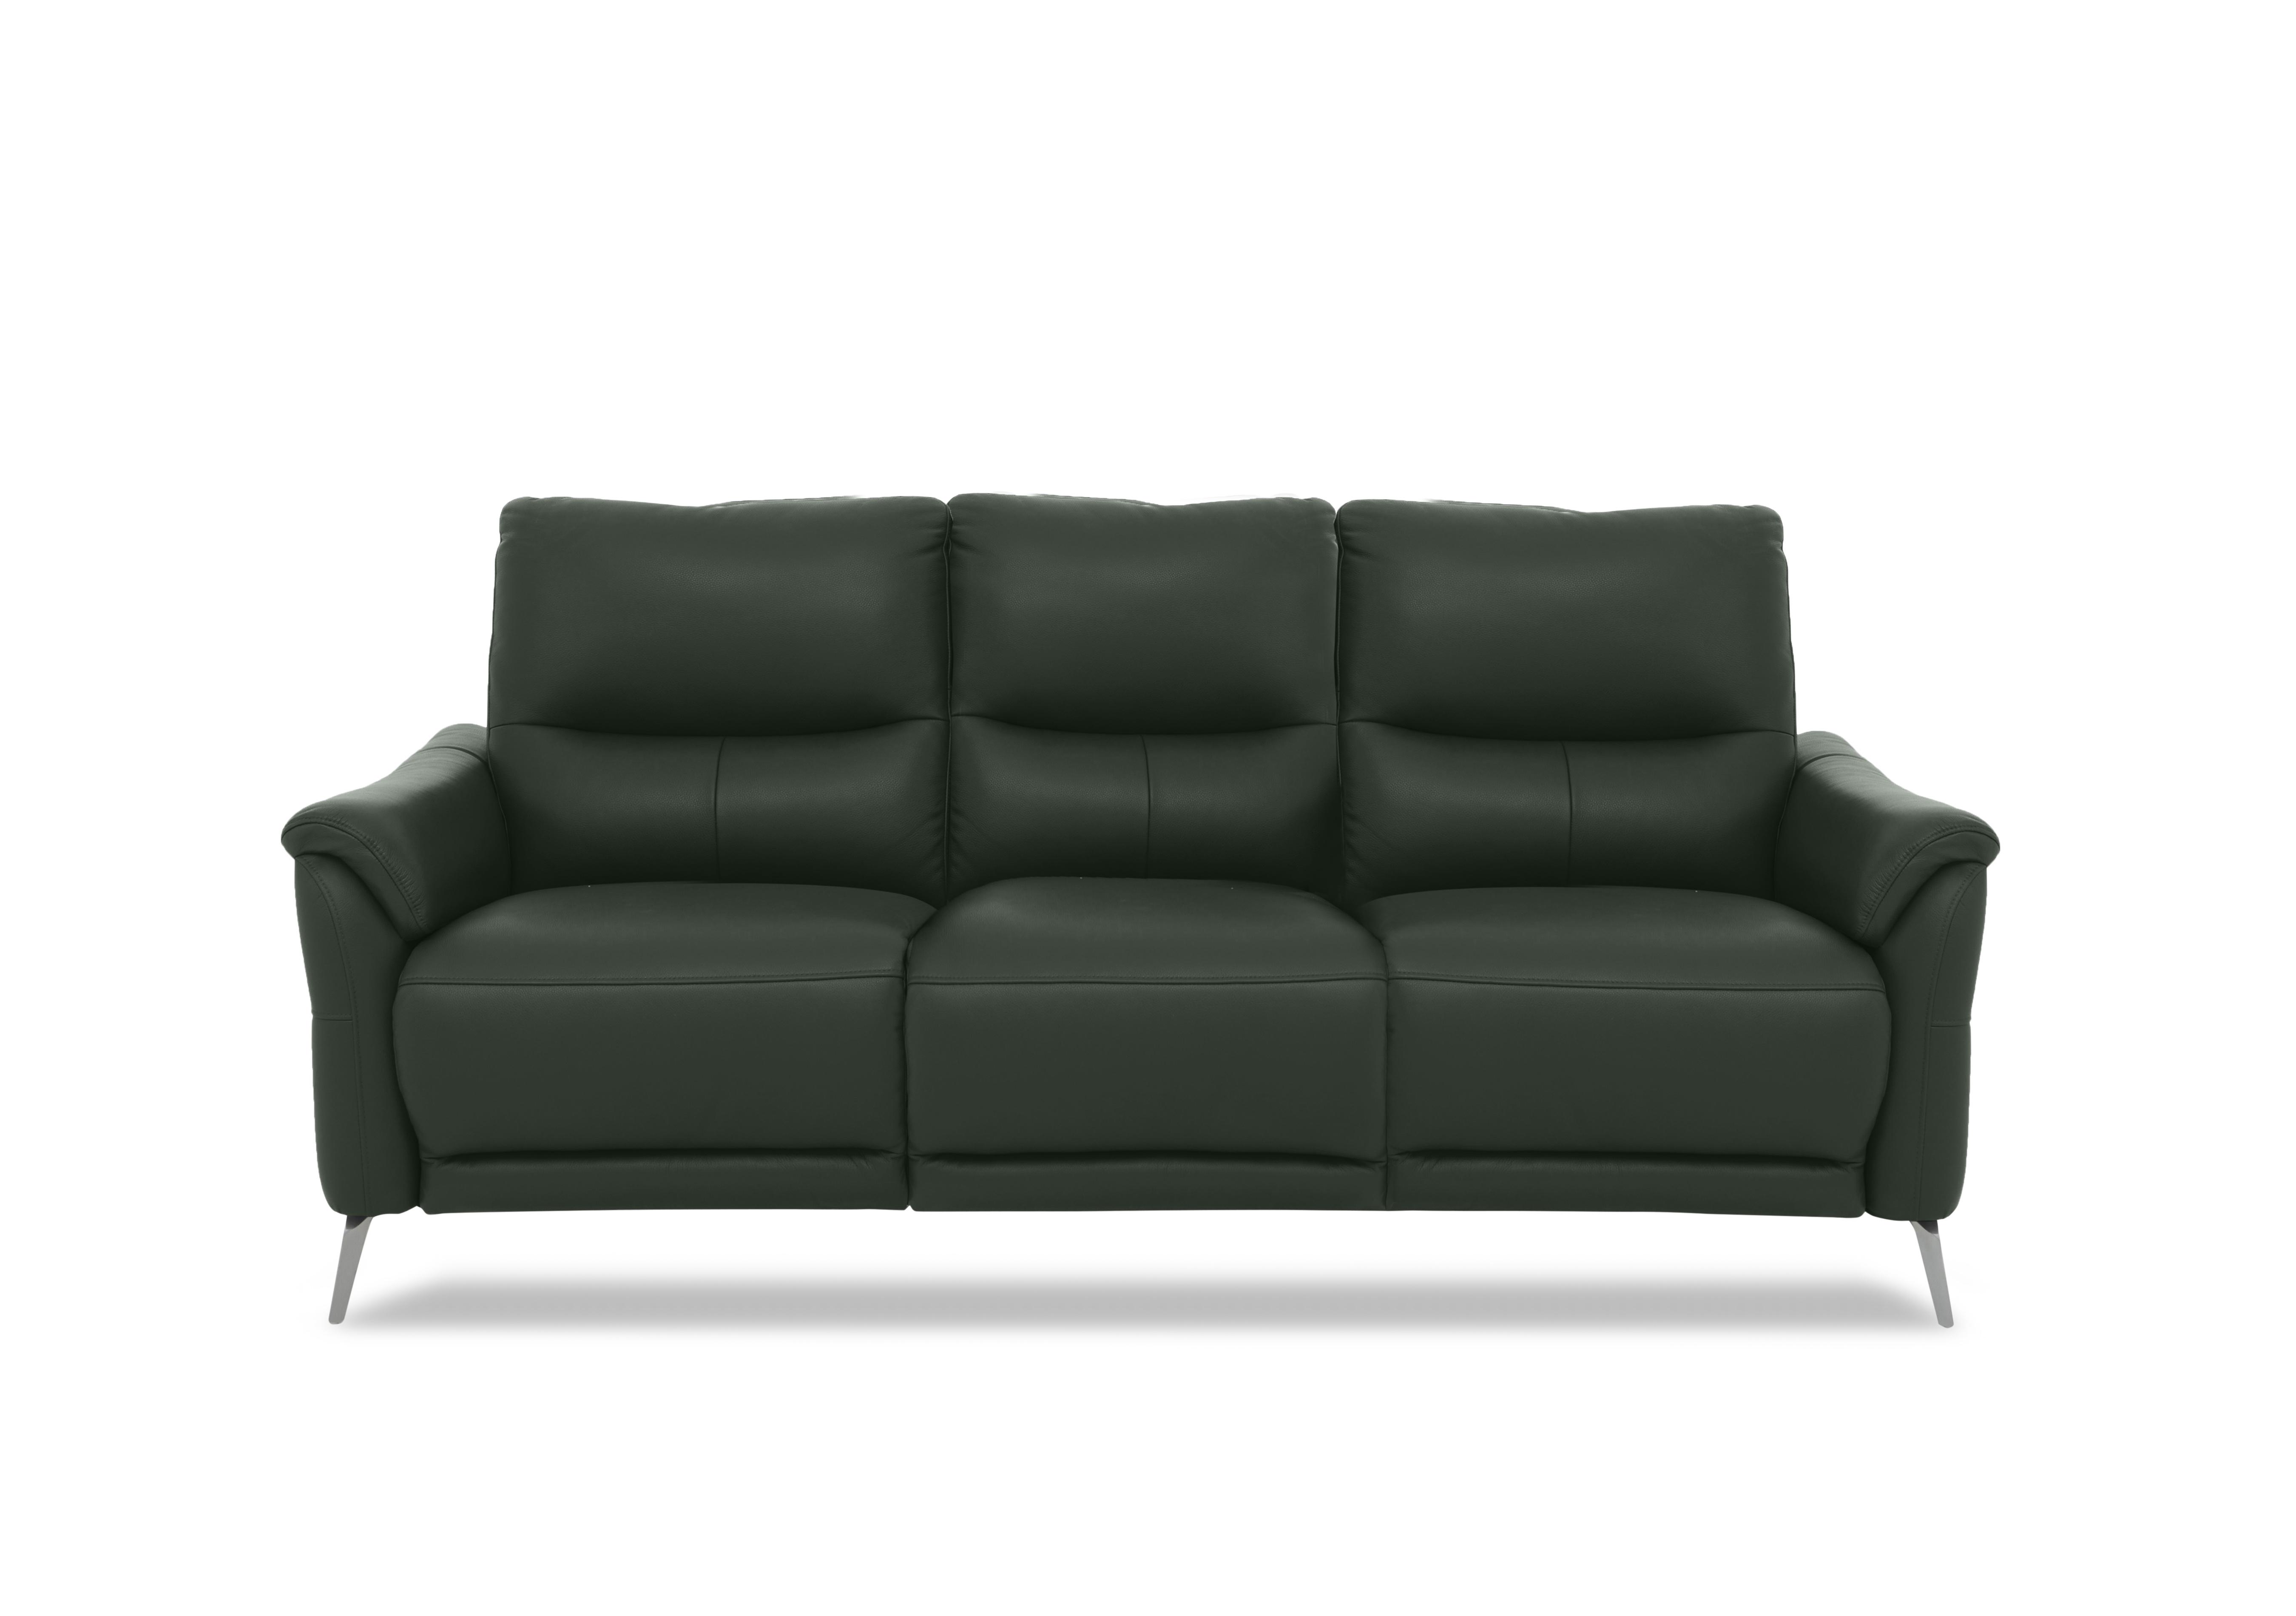 Daytona 3 Seater Leather Sofa in Cat-40/10 Oslo Pine on Furniture Village